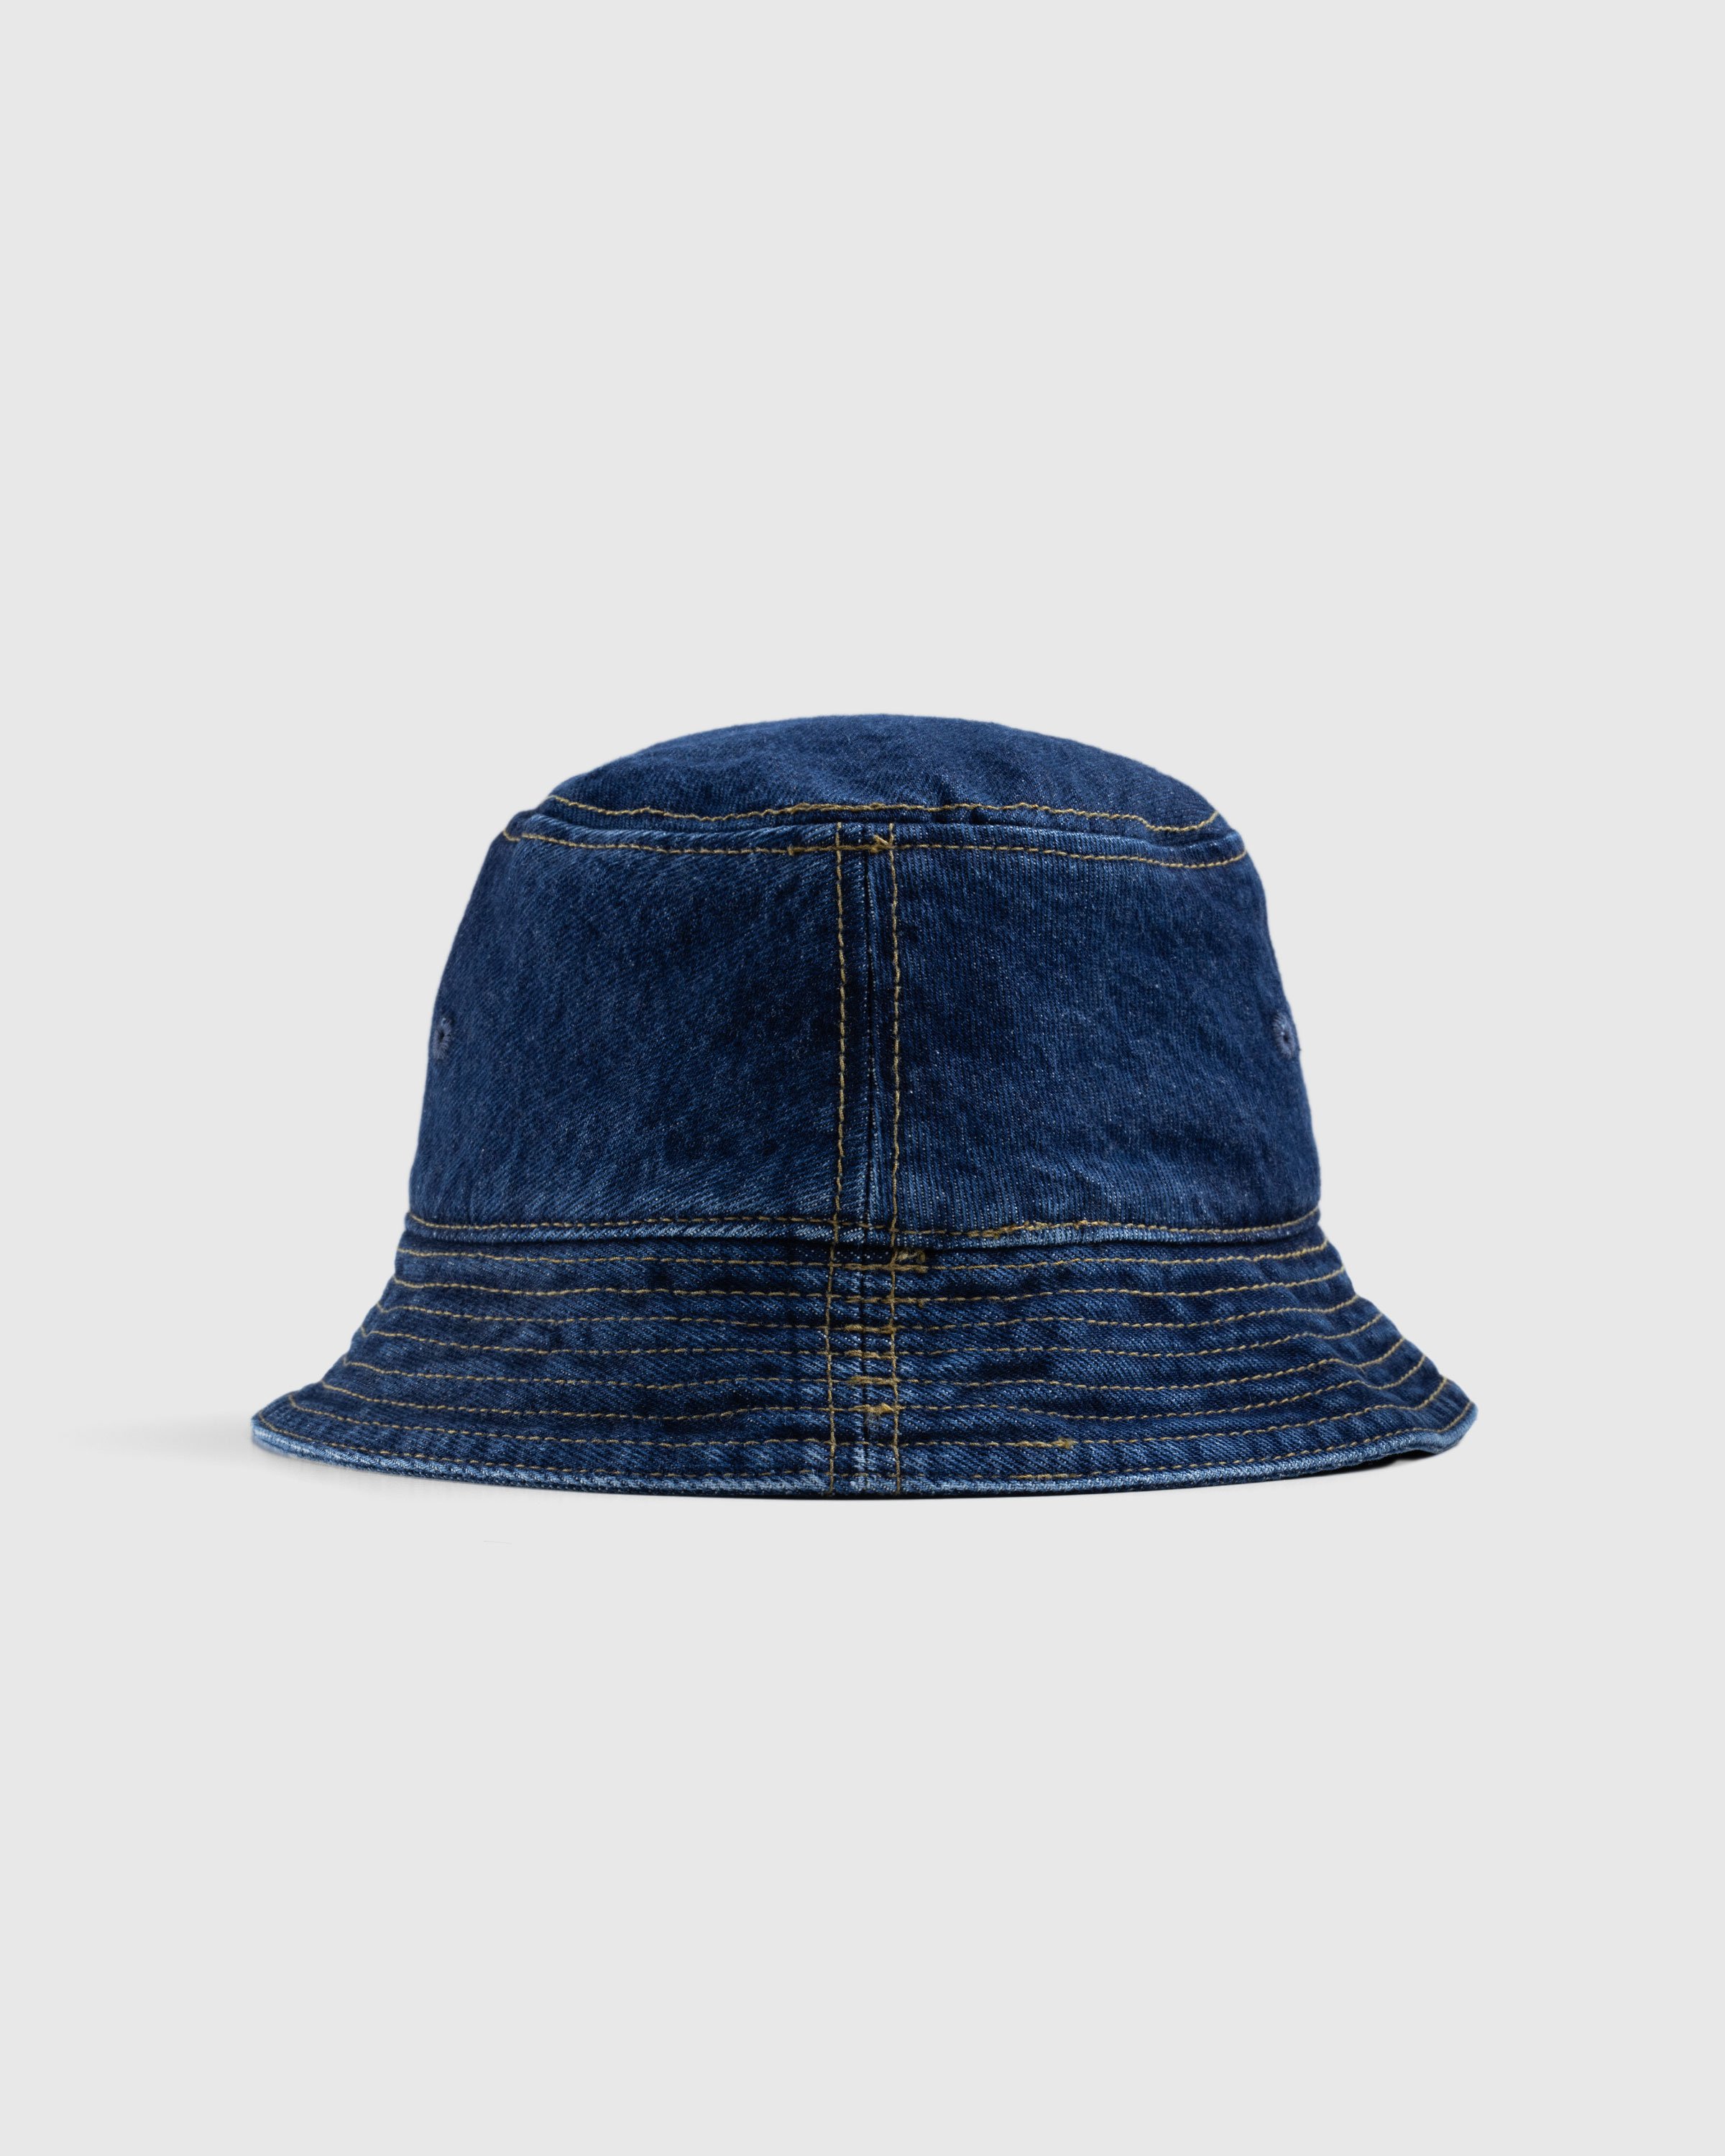 Carhartt WIP - Nash Bucket Hat Stonewashed Blue - Accessories - Blue - Image 2